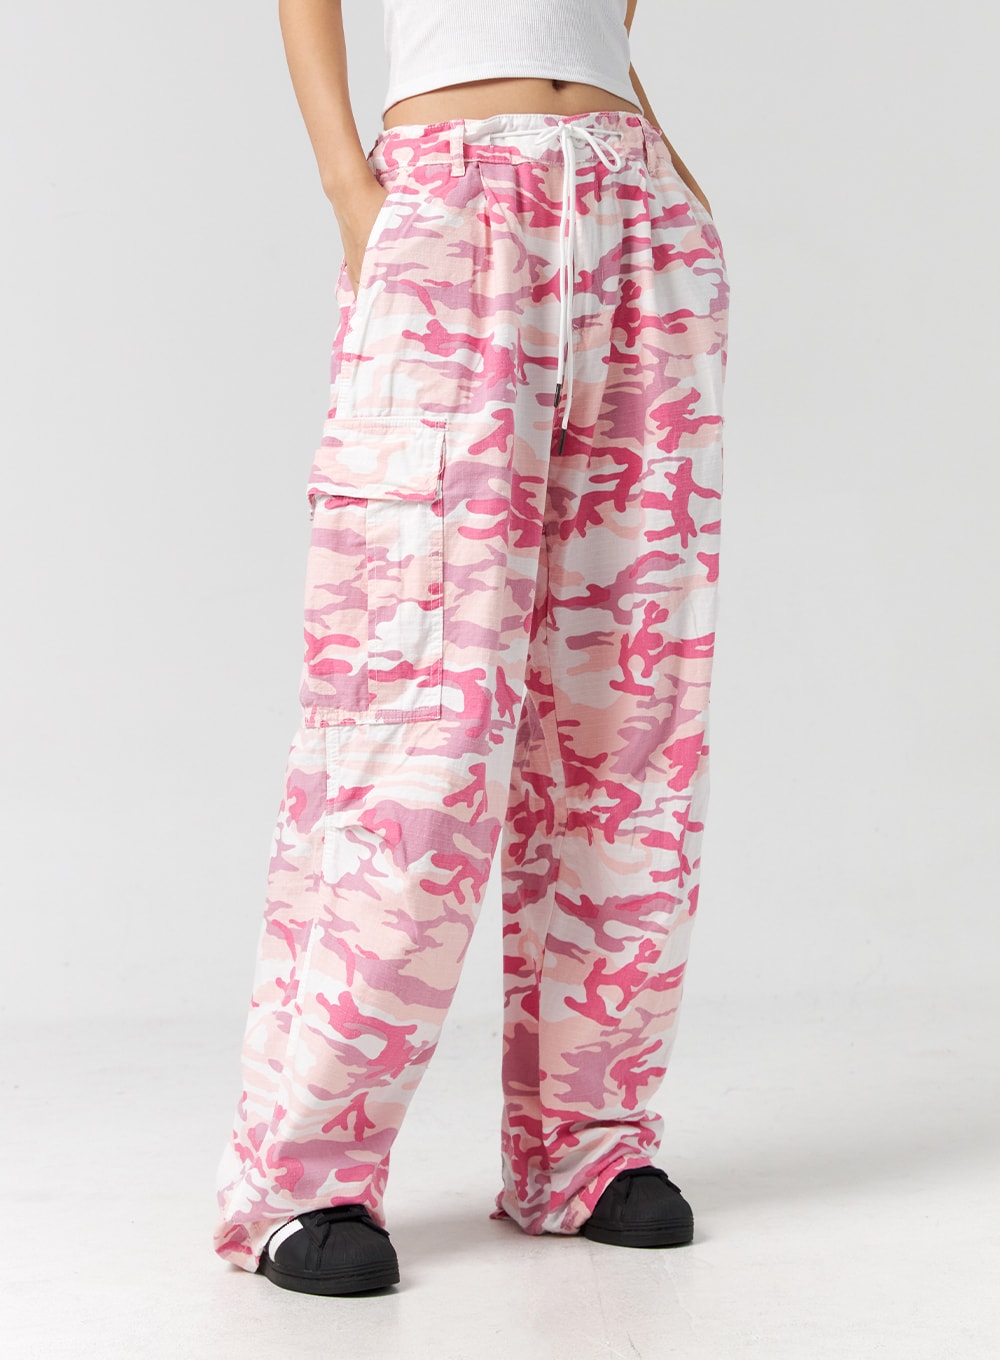 Zara Cotton Cargo Army Camouflage Print Pattern High Waisted Tapered Leg  Pants | eBay